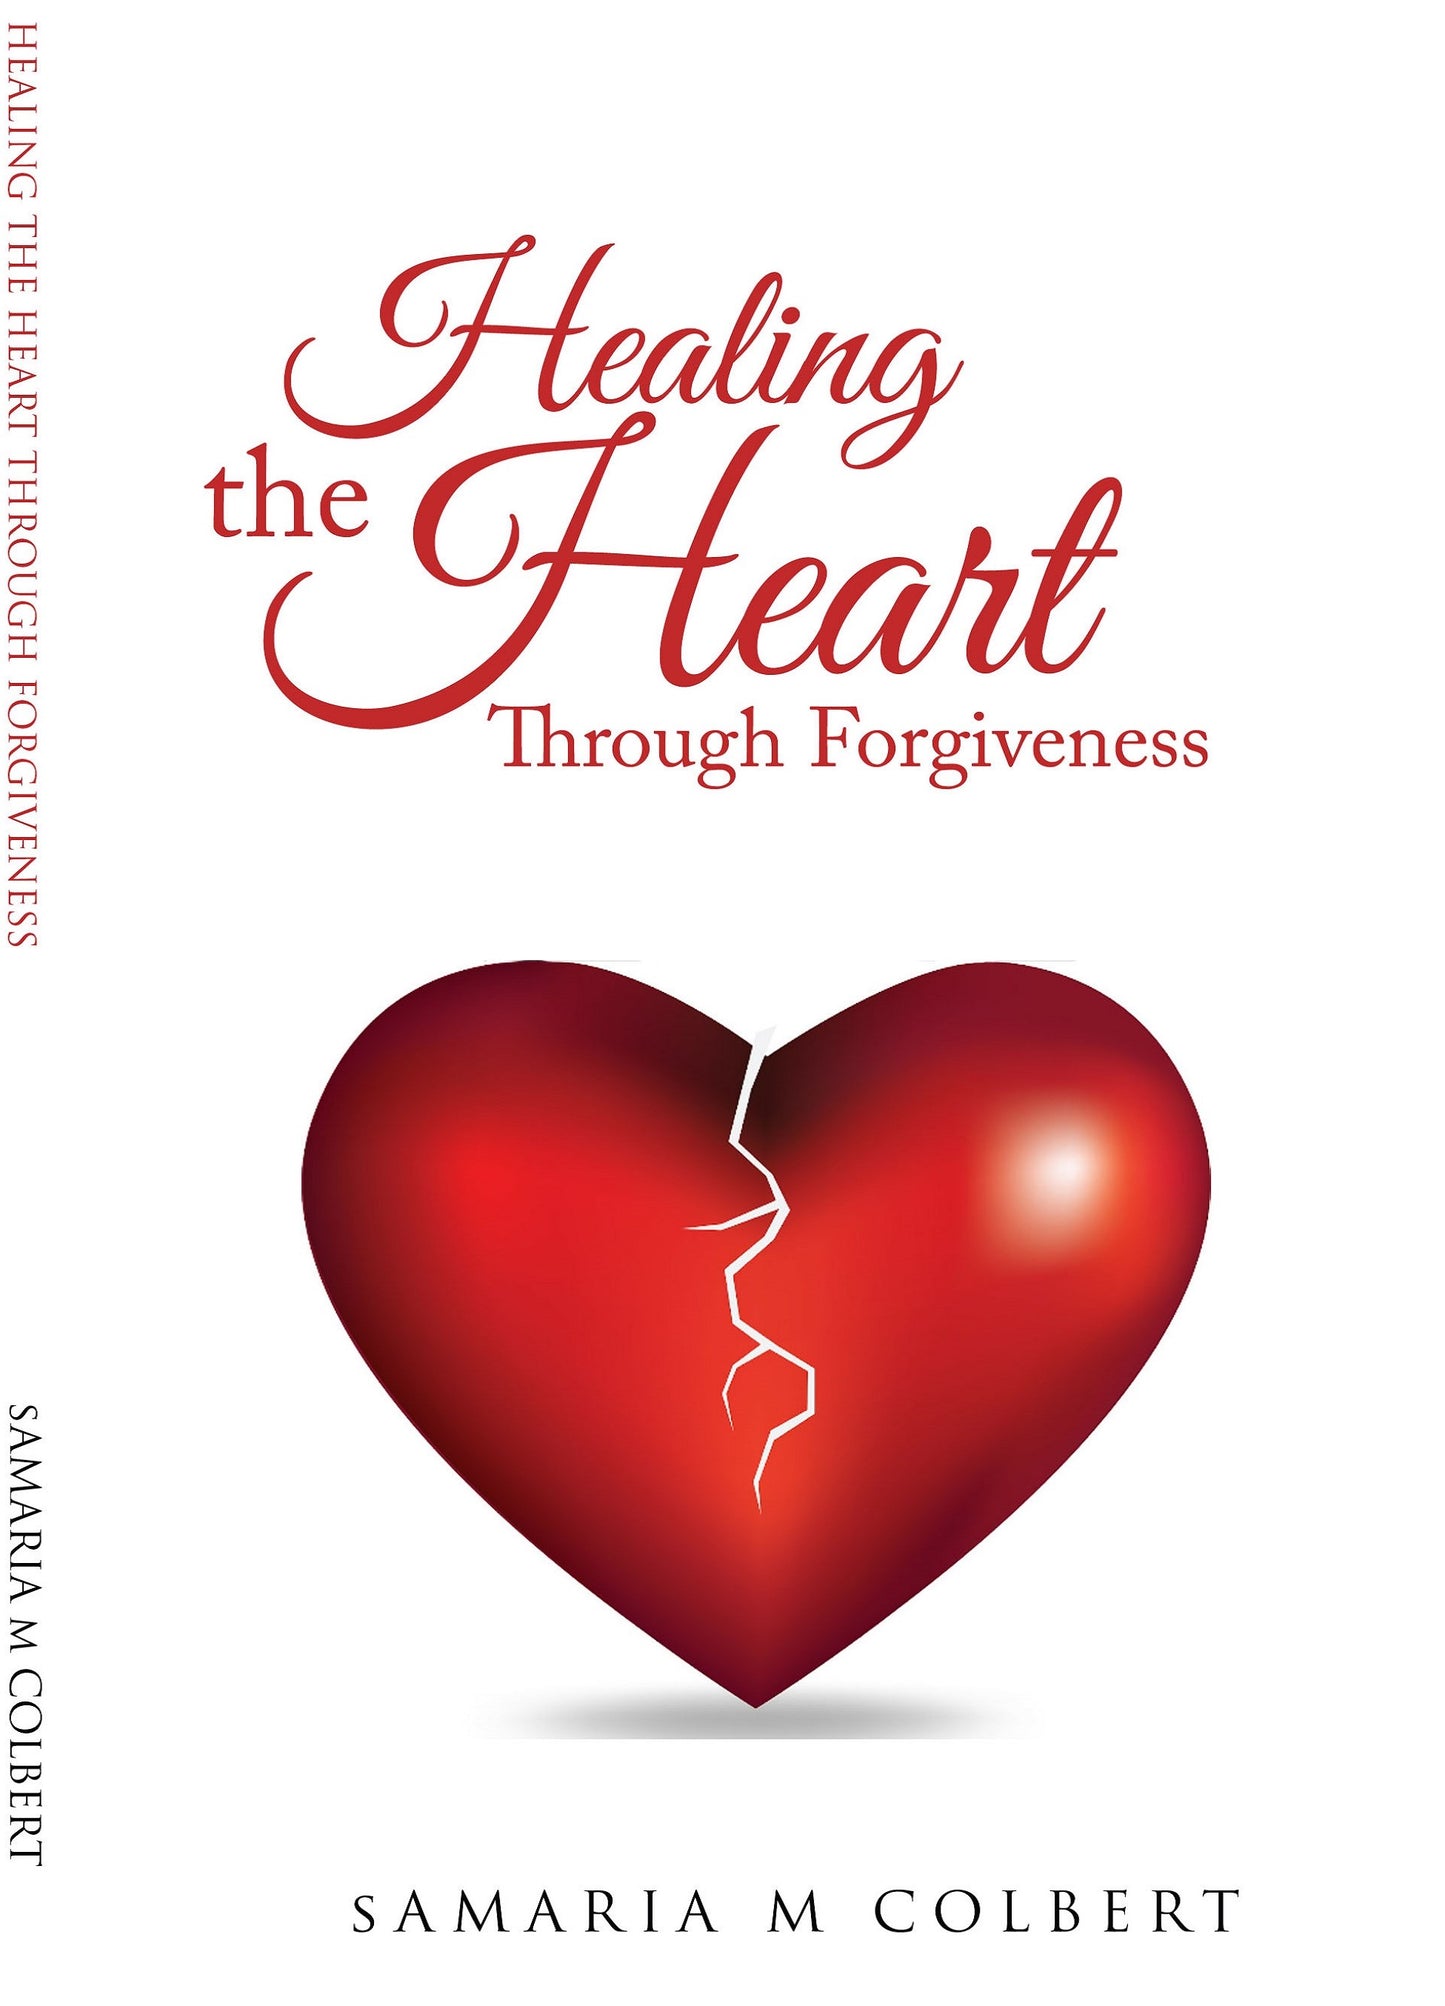 HEALING THE HEART THROUGH FORGIVENESS